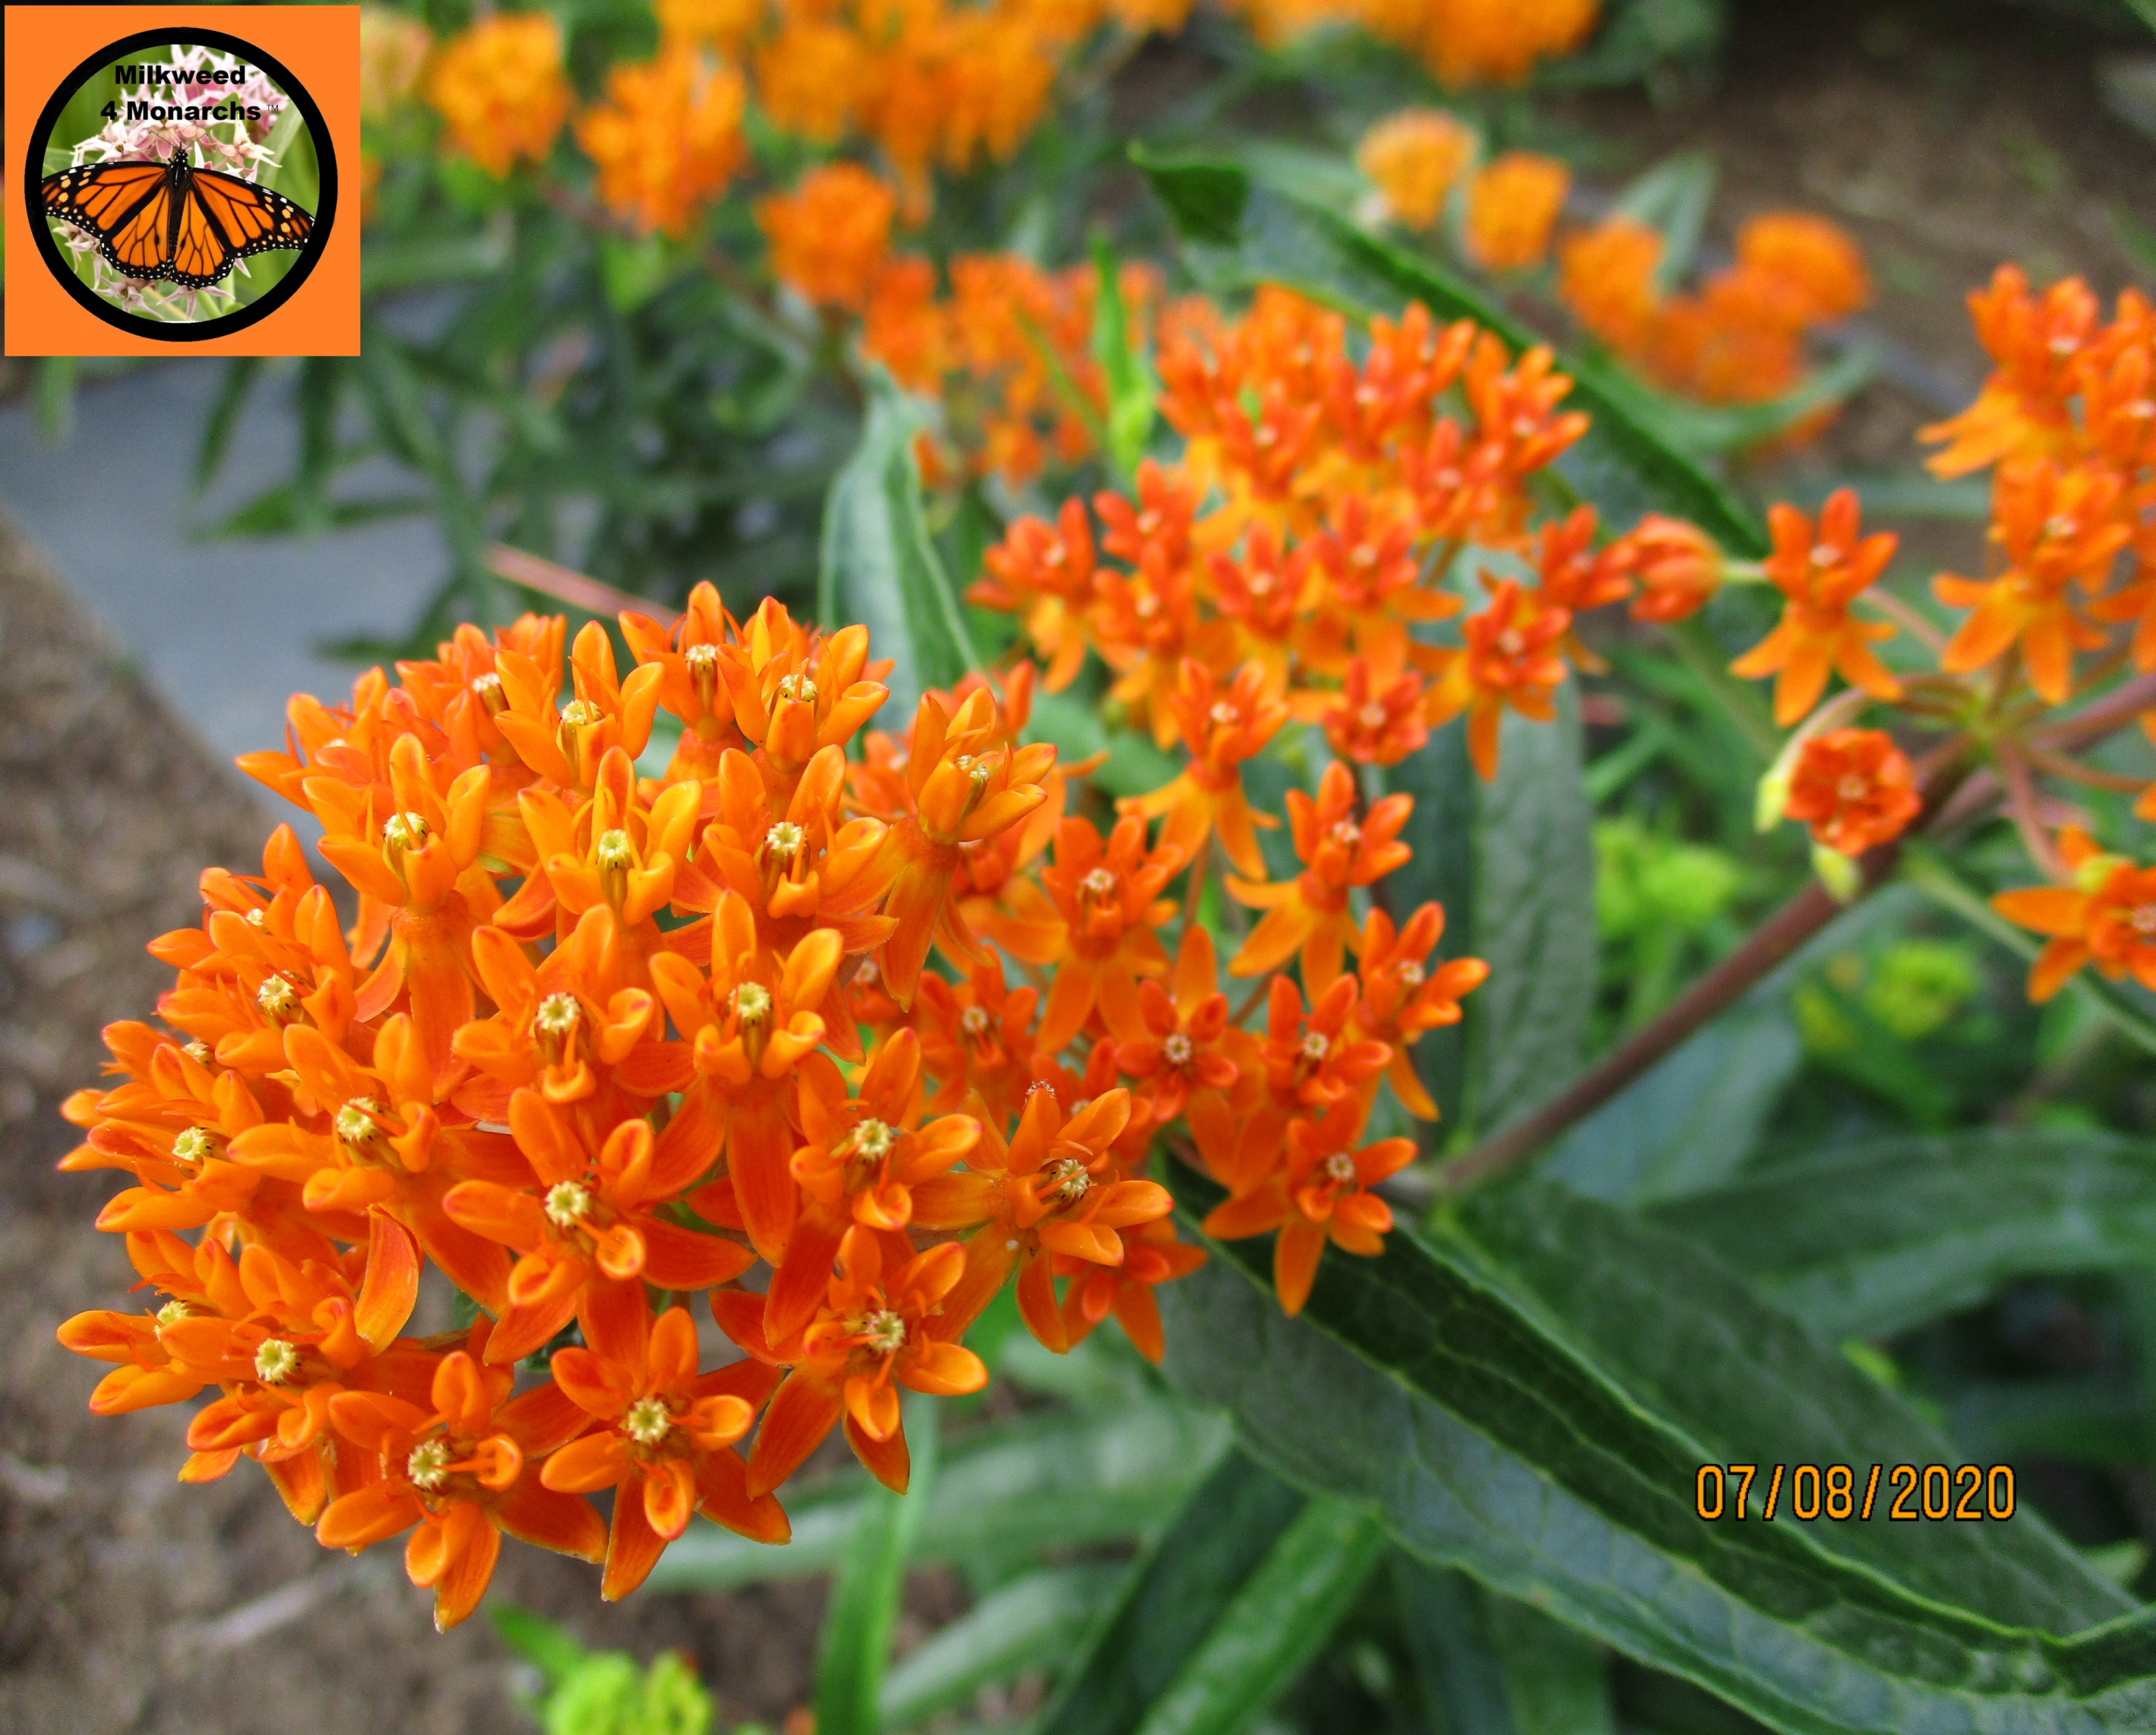 orange butterfly weed seeds, asclepias tuberosa - milkweed 4 monarchs